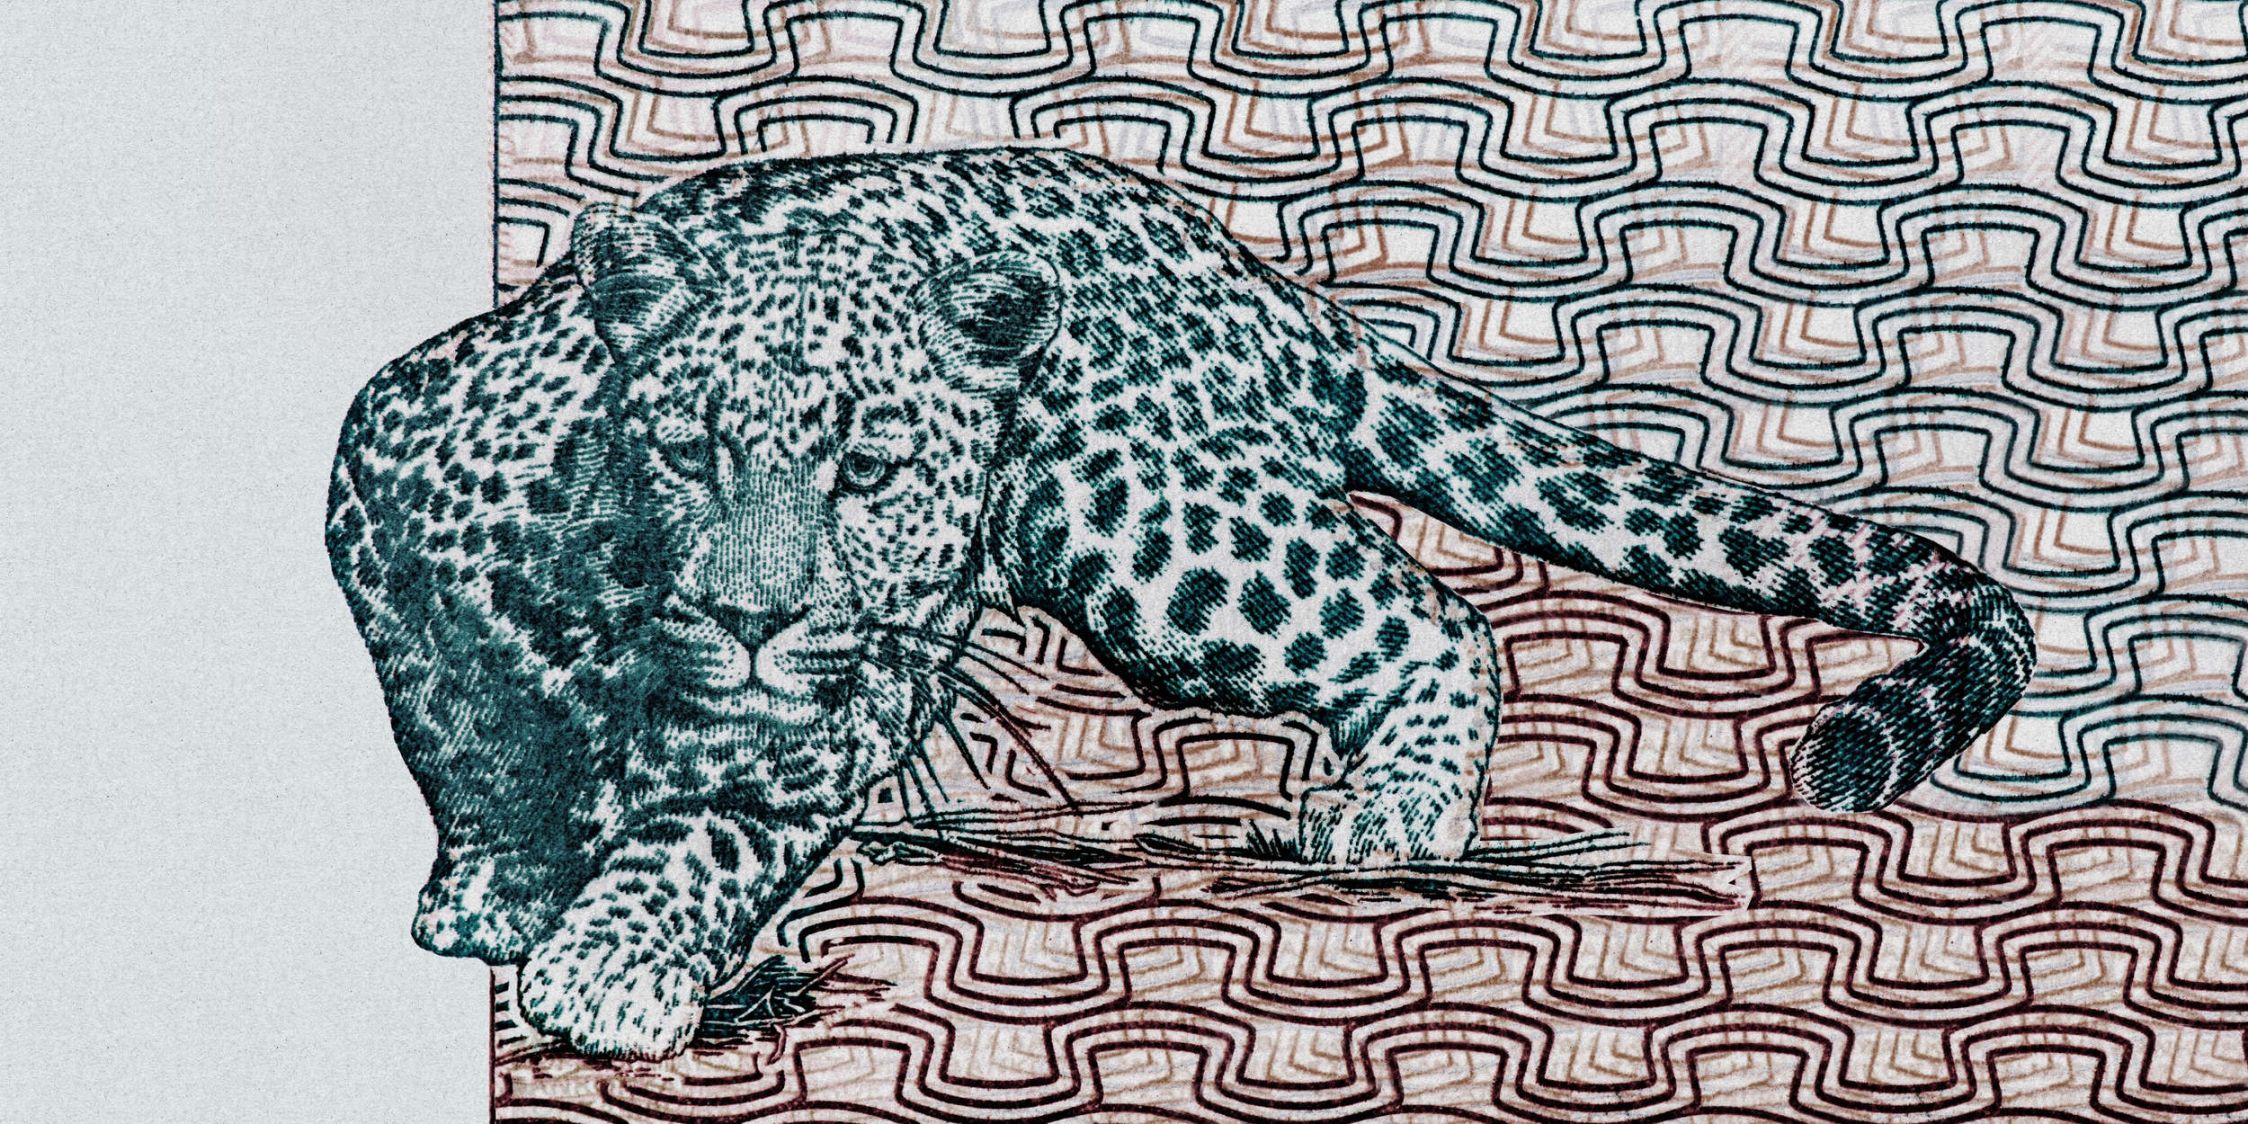             Fotomurali »yugana« - leopardo davanti a un motivo astratto - Natura qualita consistenza in carta kraft | tessuto non tessuto opaco e liscio
        